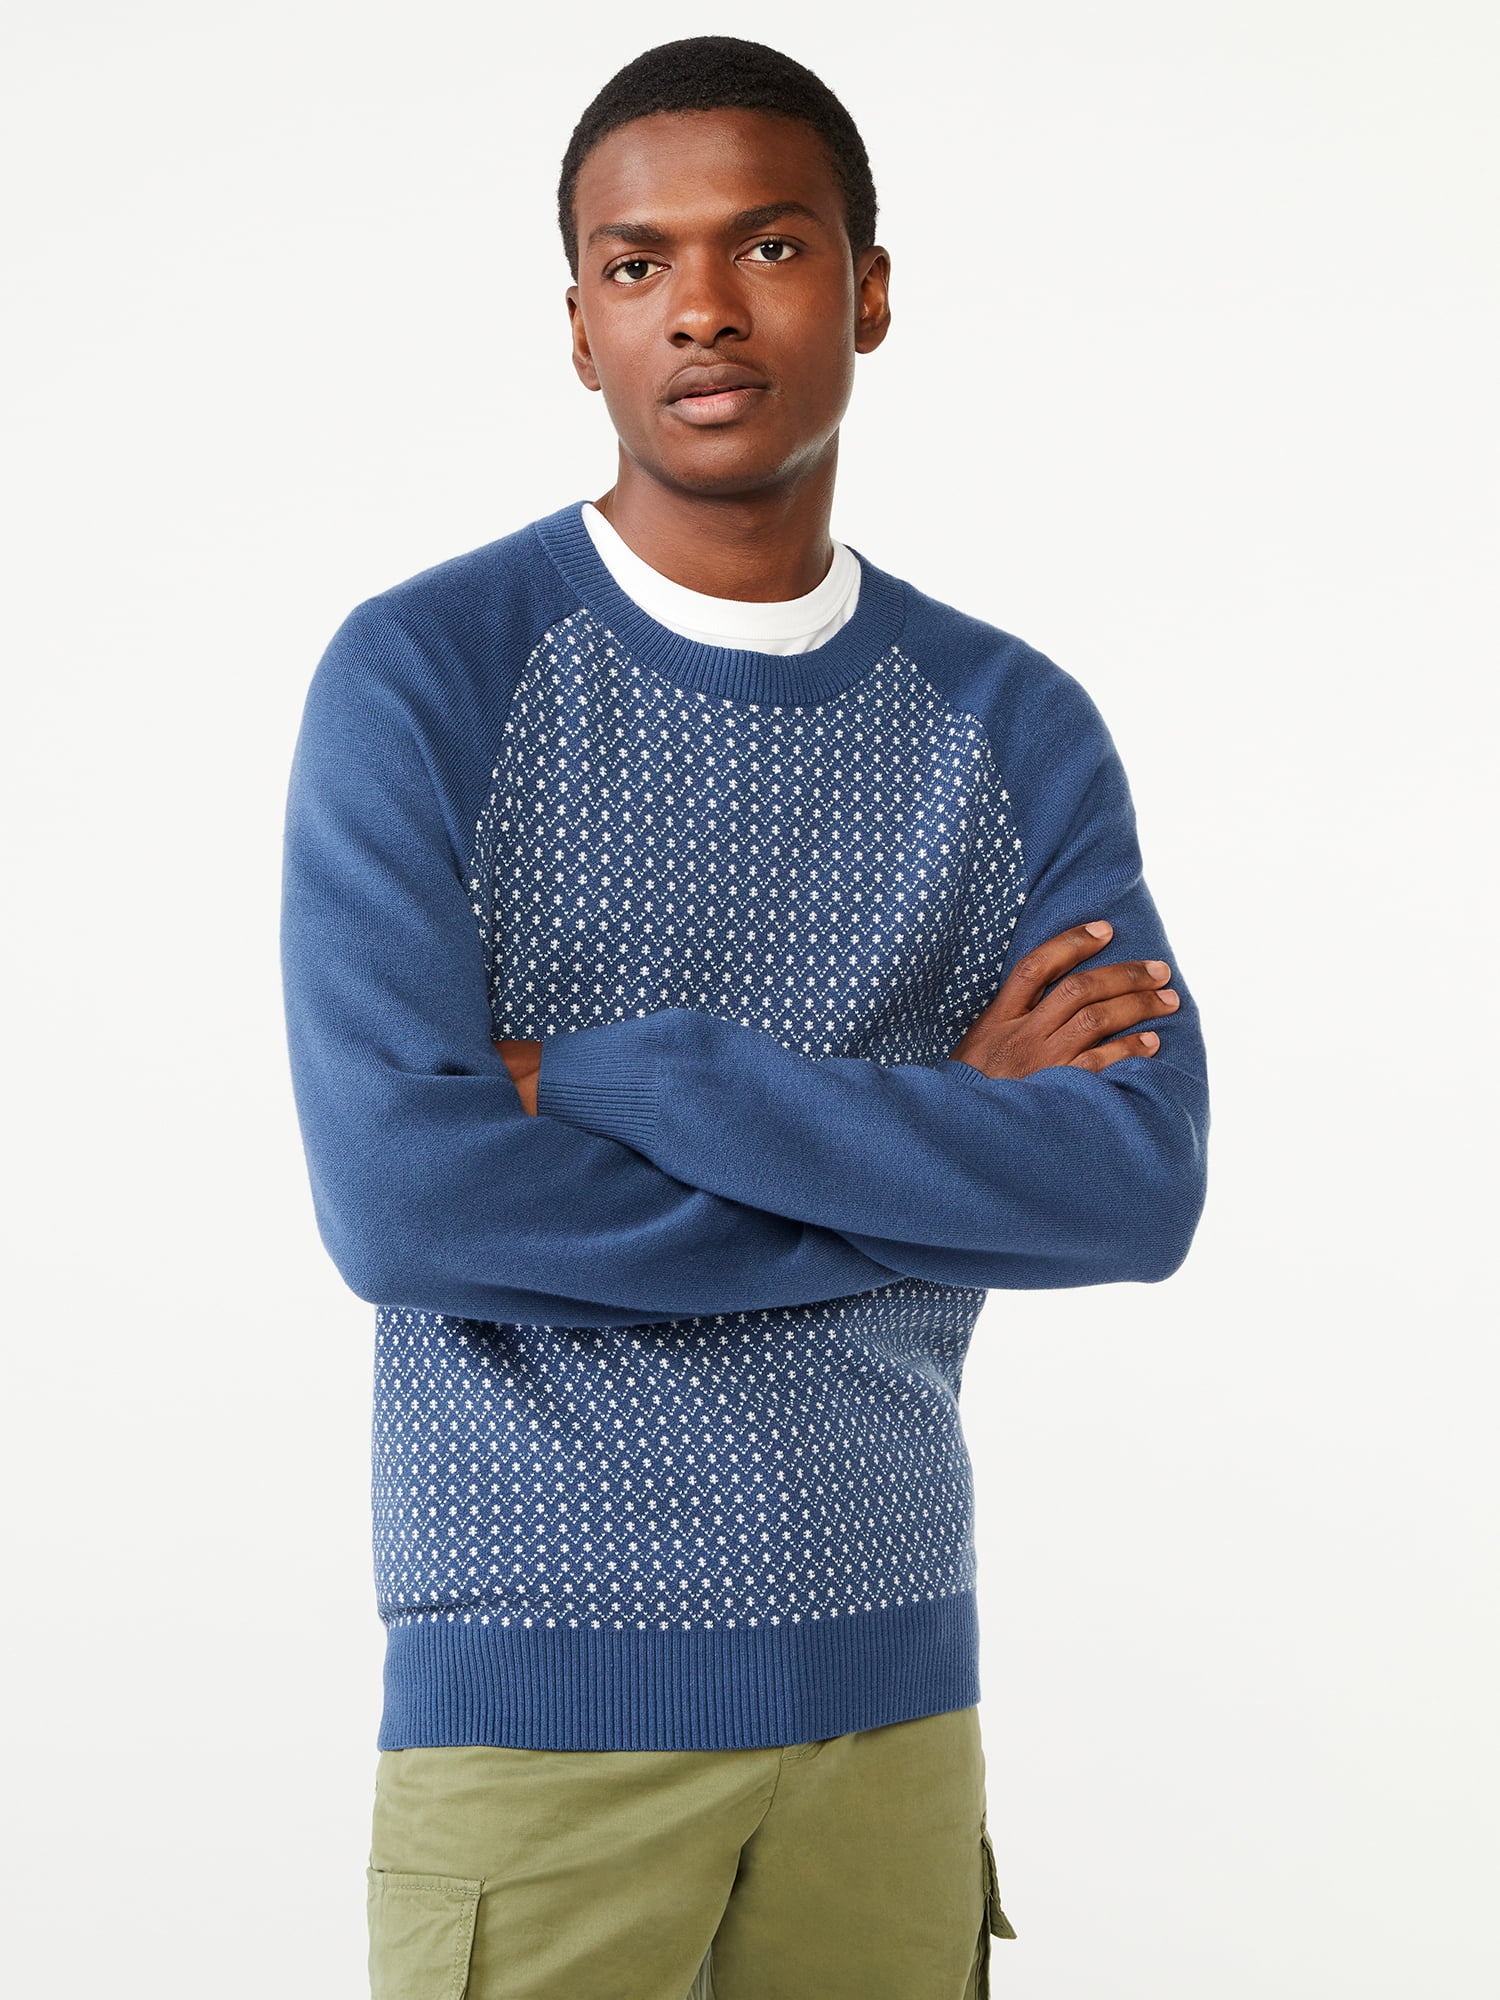 Free Assembly Men's Cashmere Touch Texture Stitch Sweater - Walmart.com